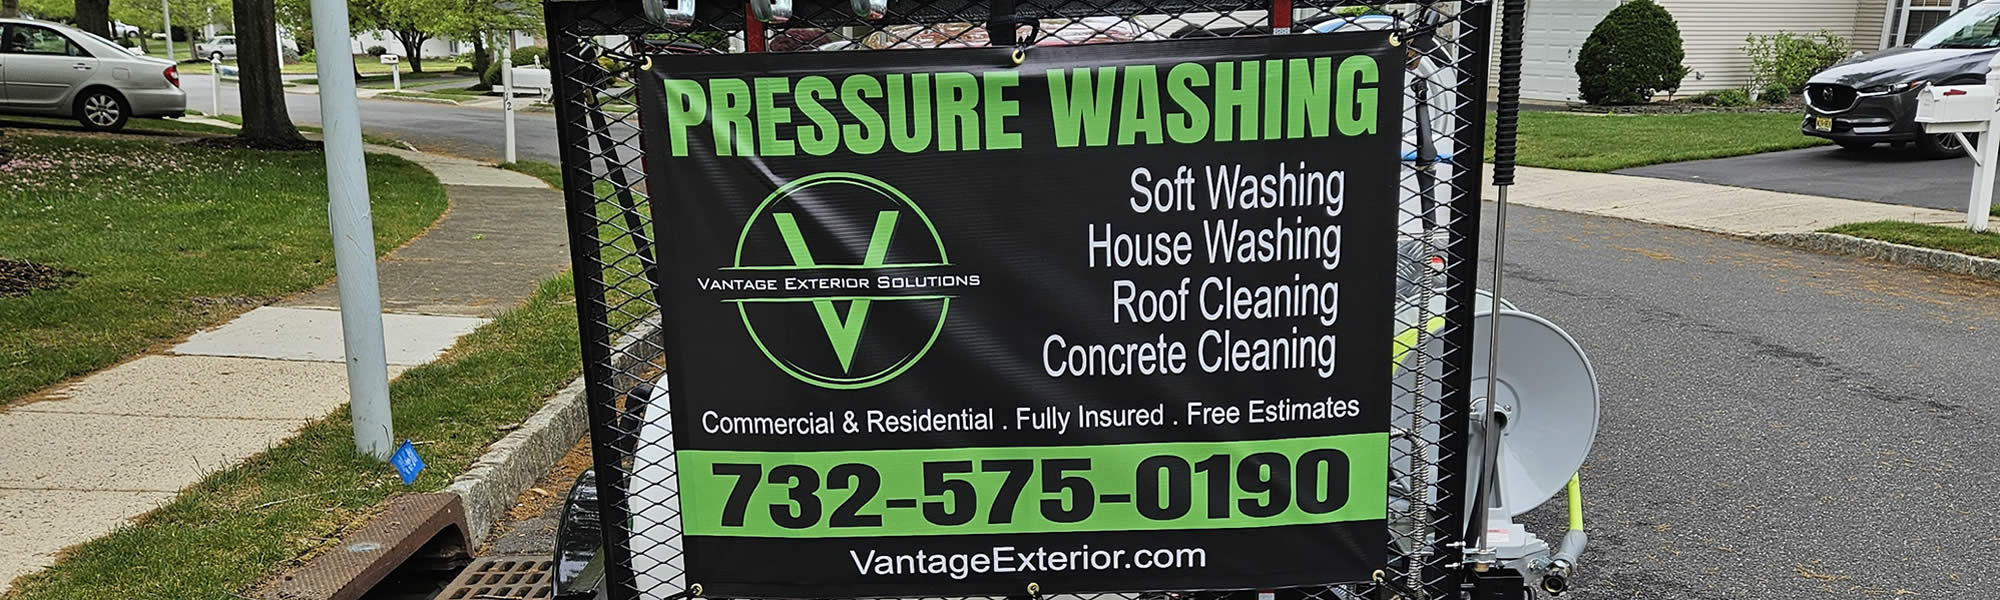 Pressure Washing Services NJ